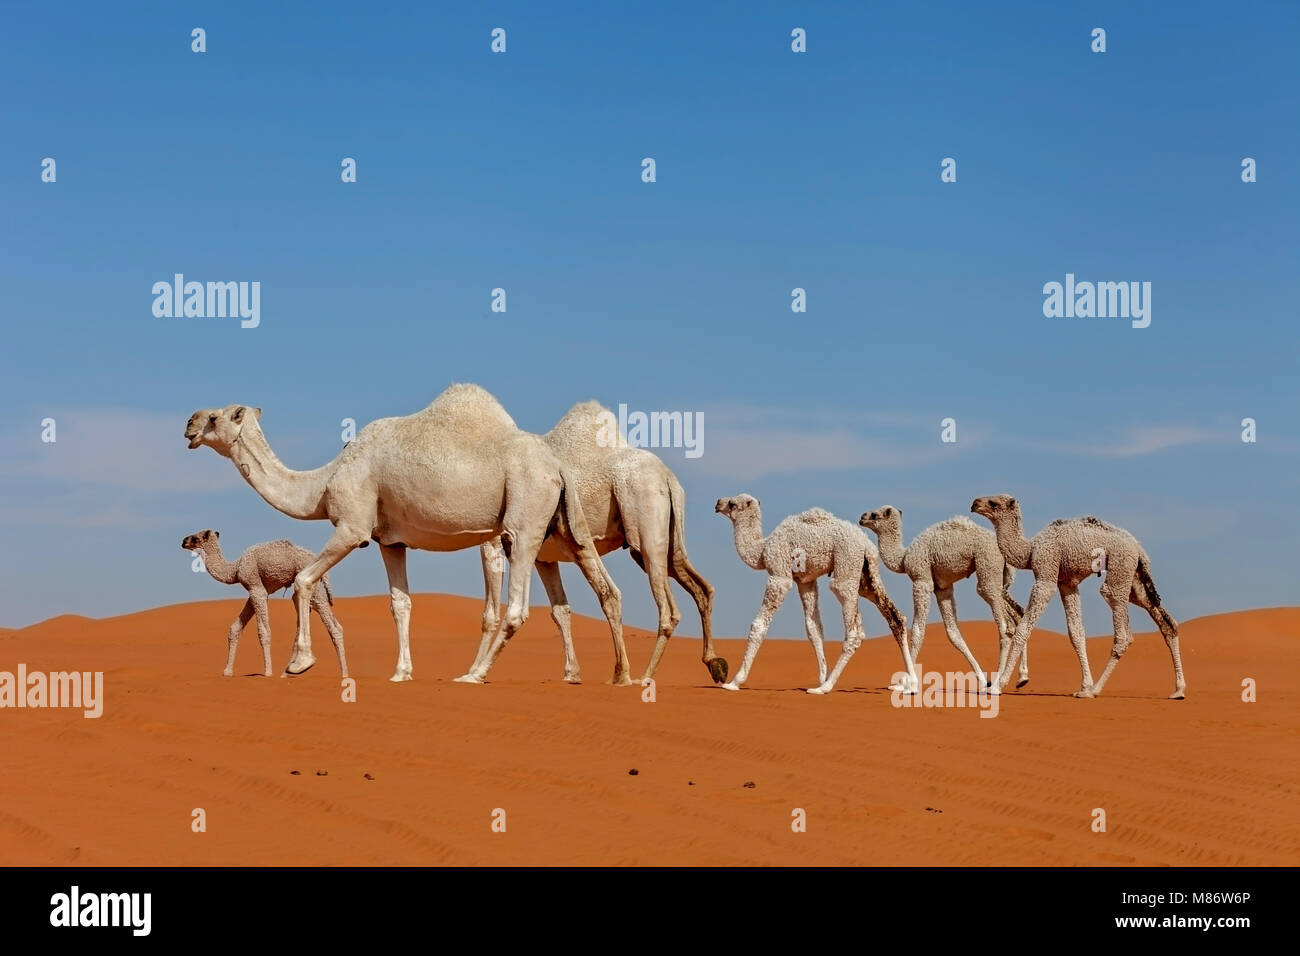 Camel calves walking in desert, Riyadh, Saudi Arabia Stock Photo